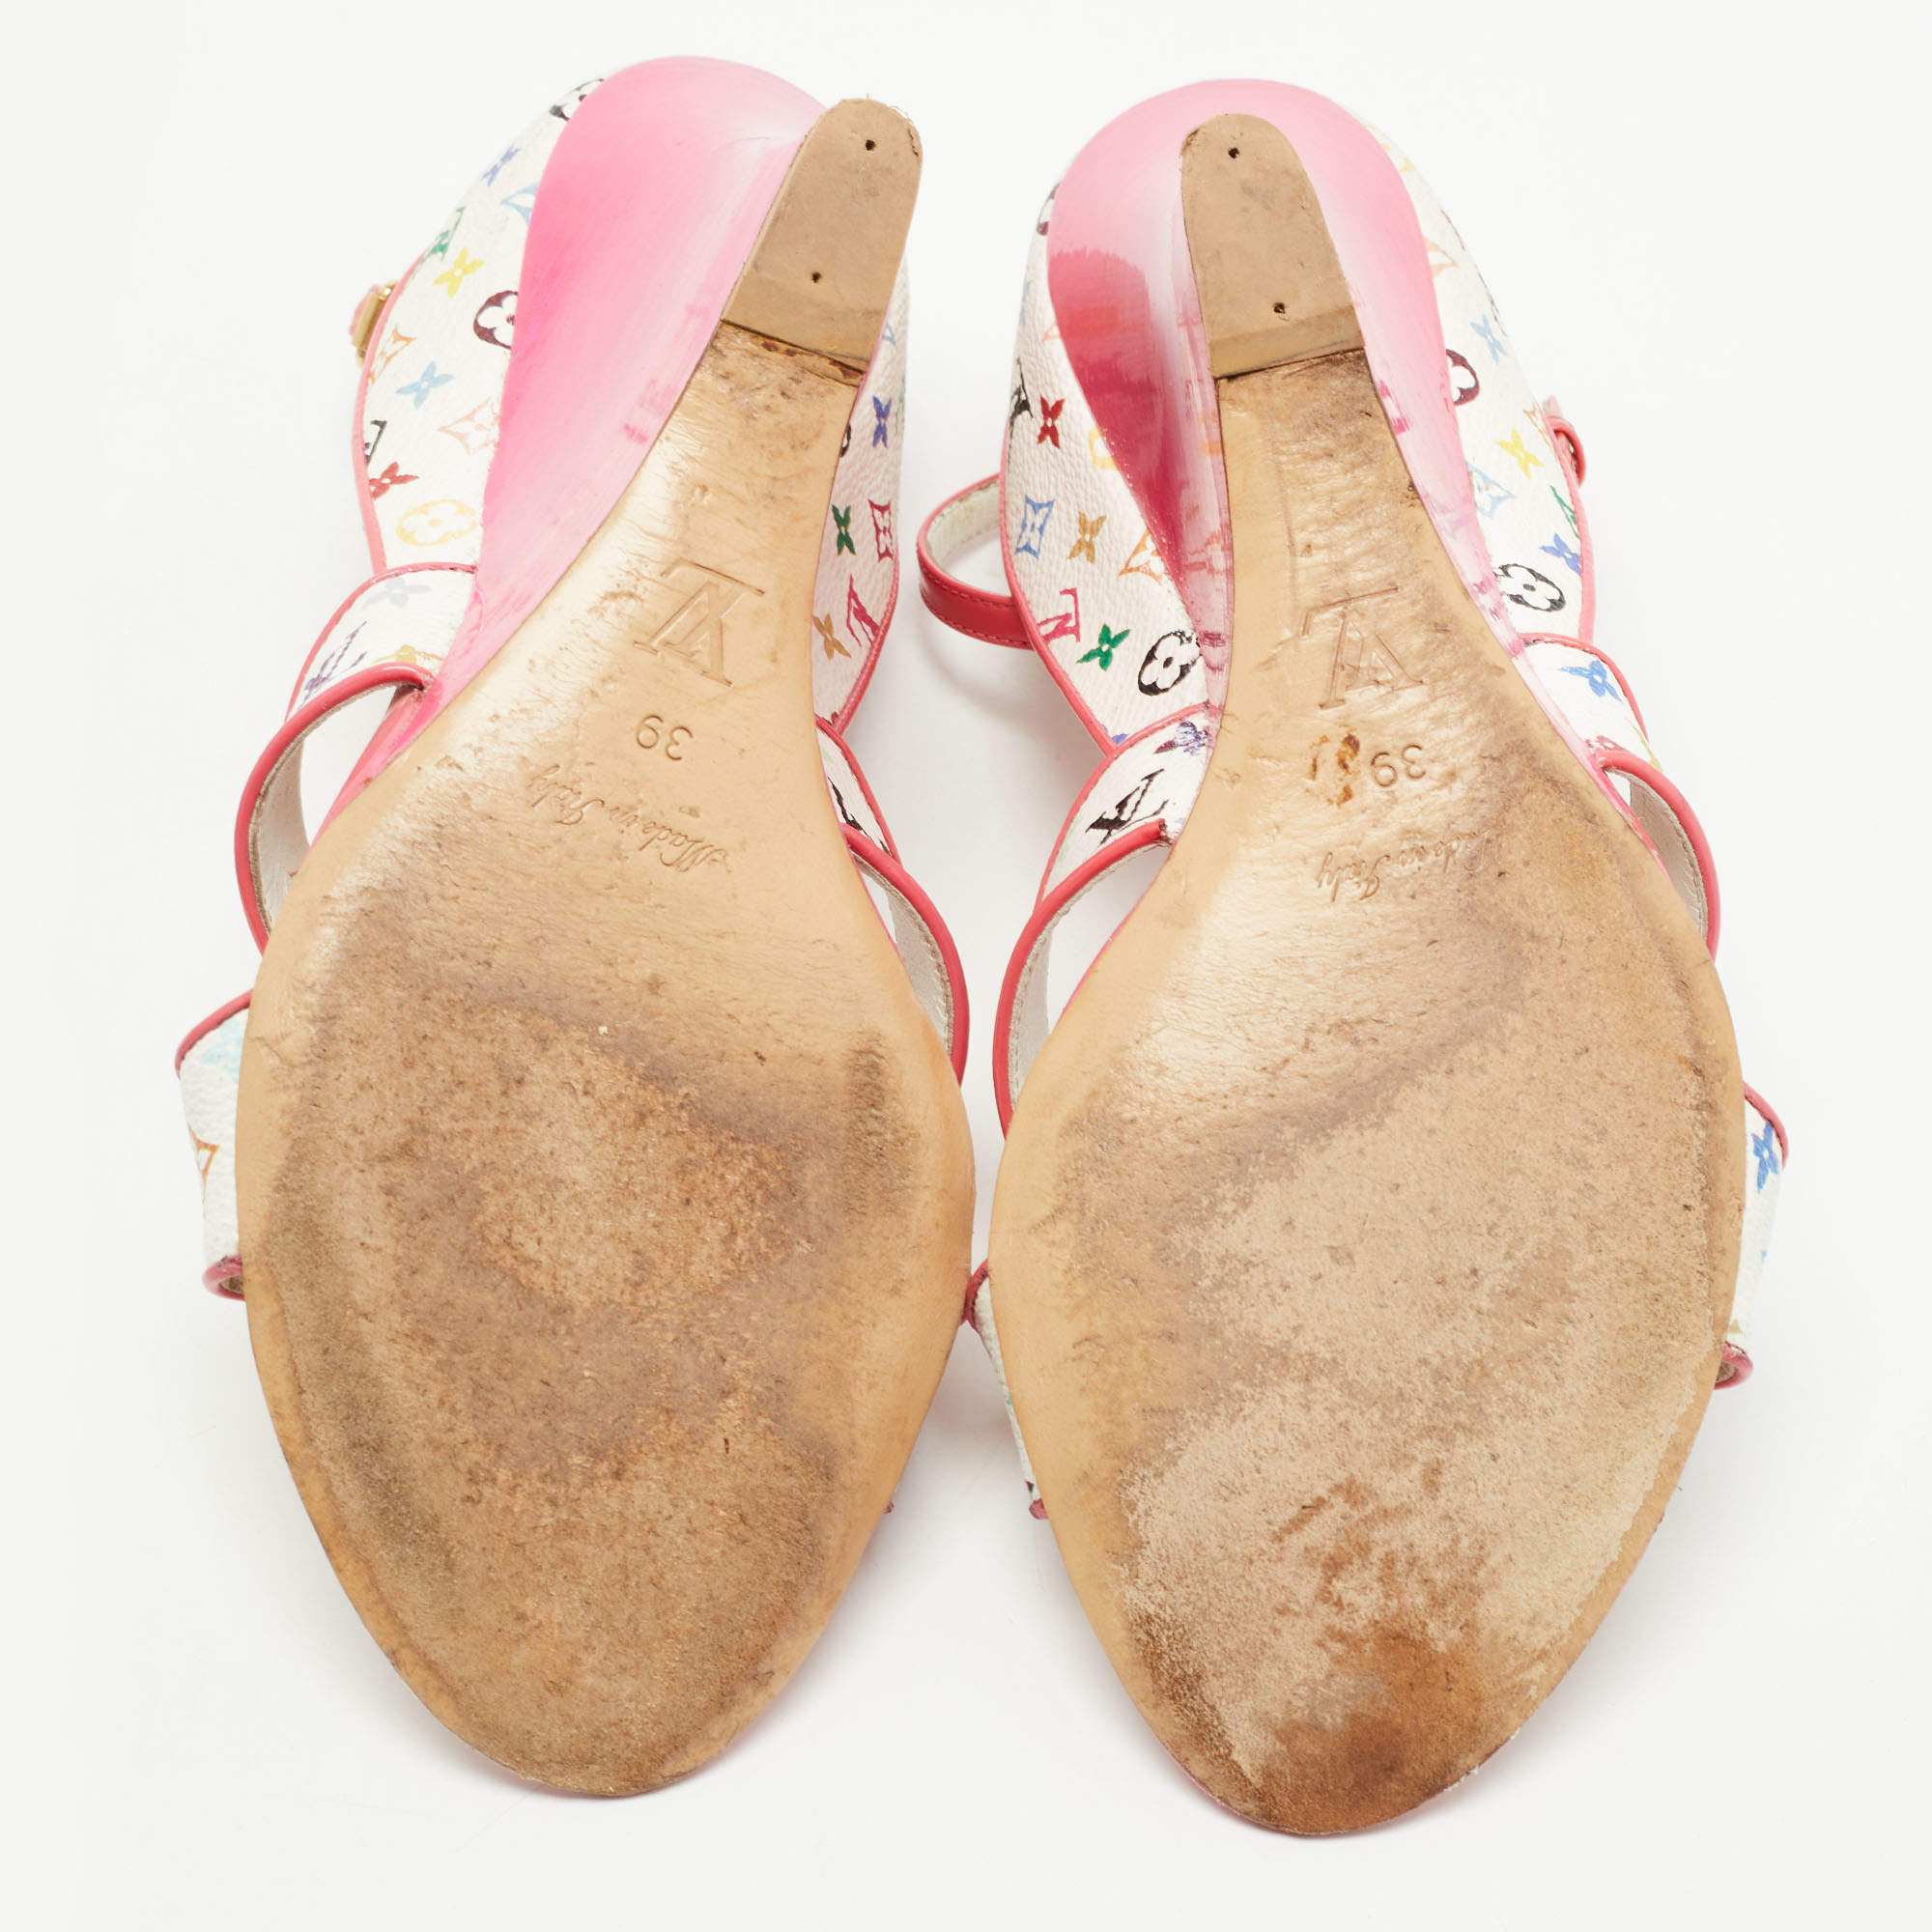 Louis Vuitton Monogram Womens Heeled Sandals, Pink, 39